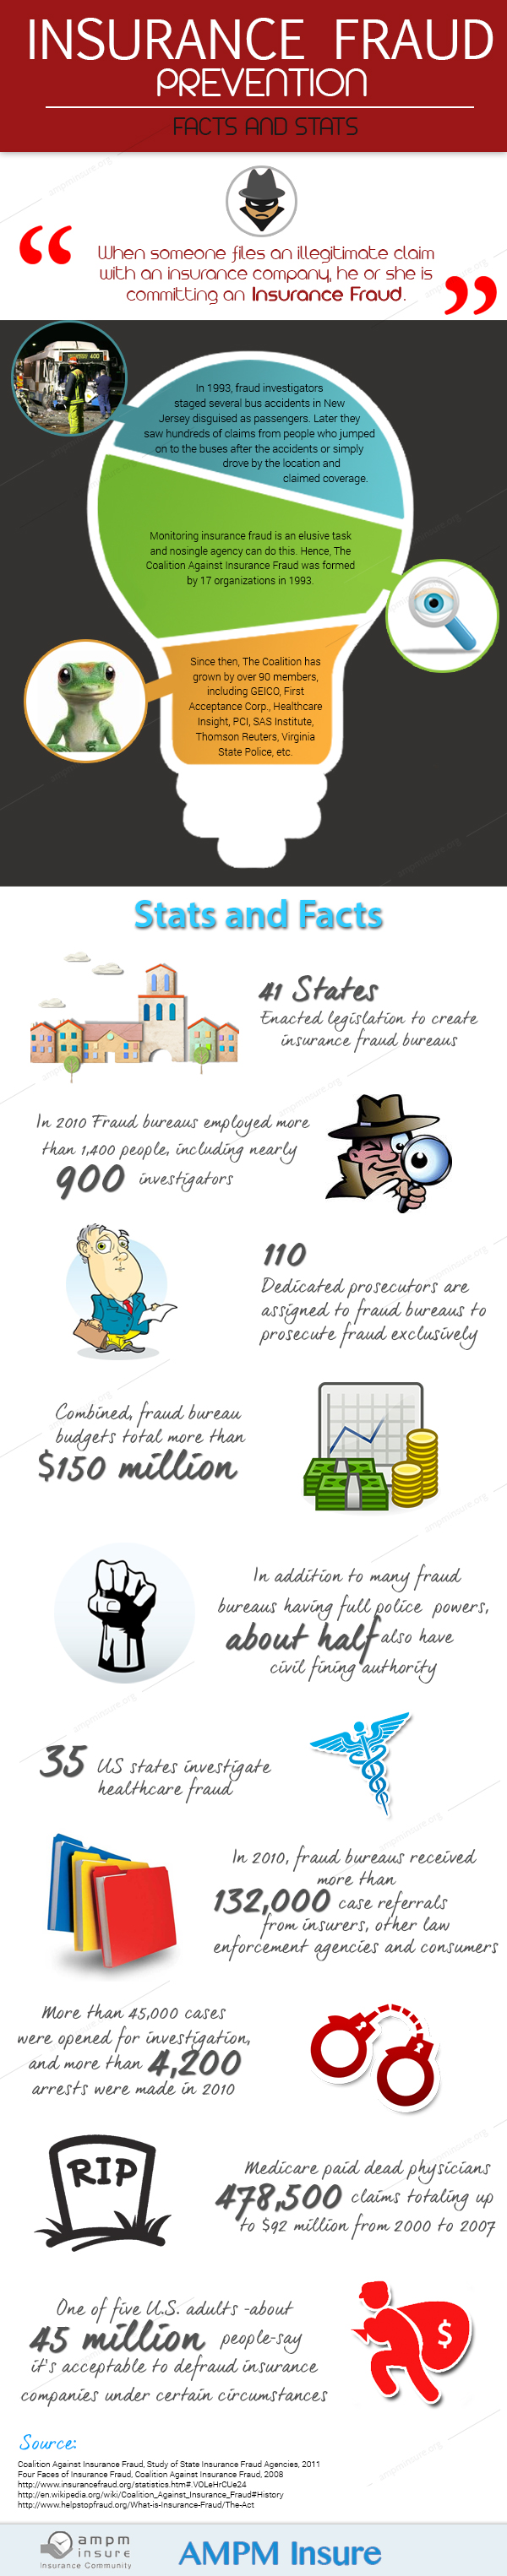 Insurance Fraud Prevention Infographic